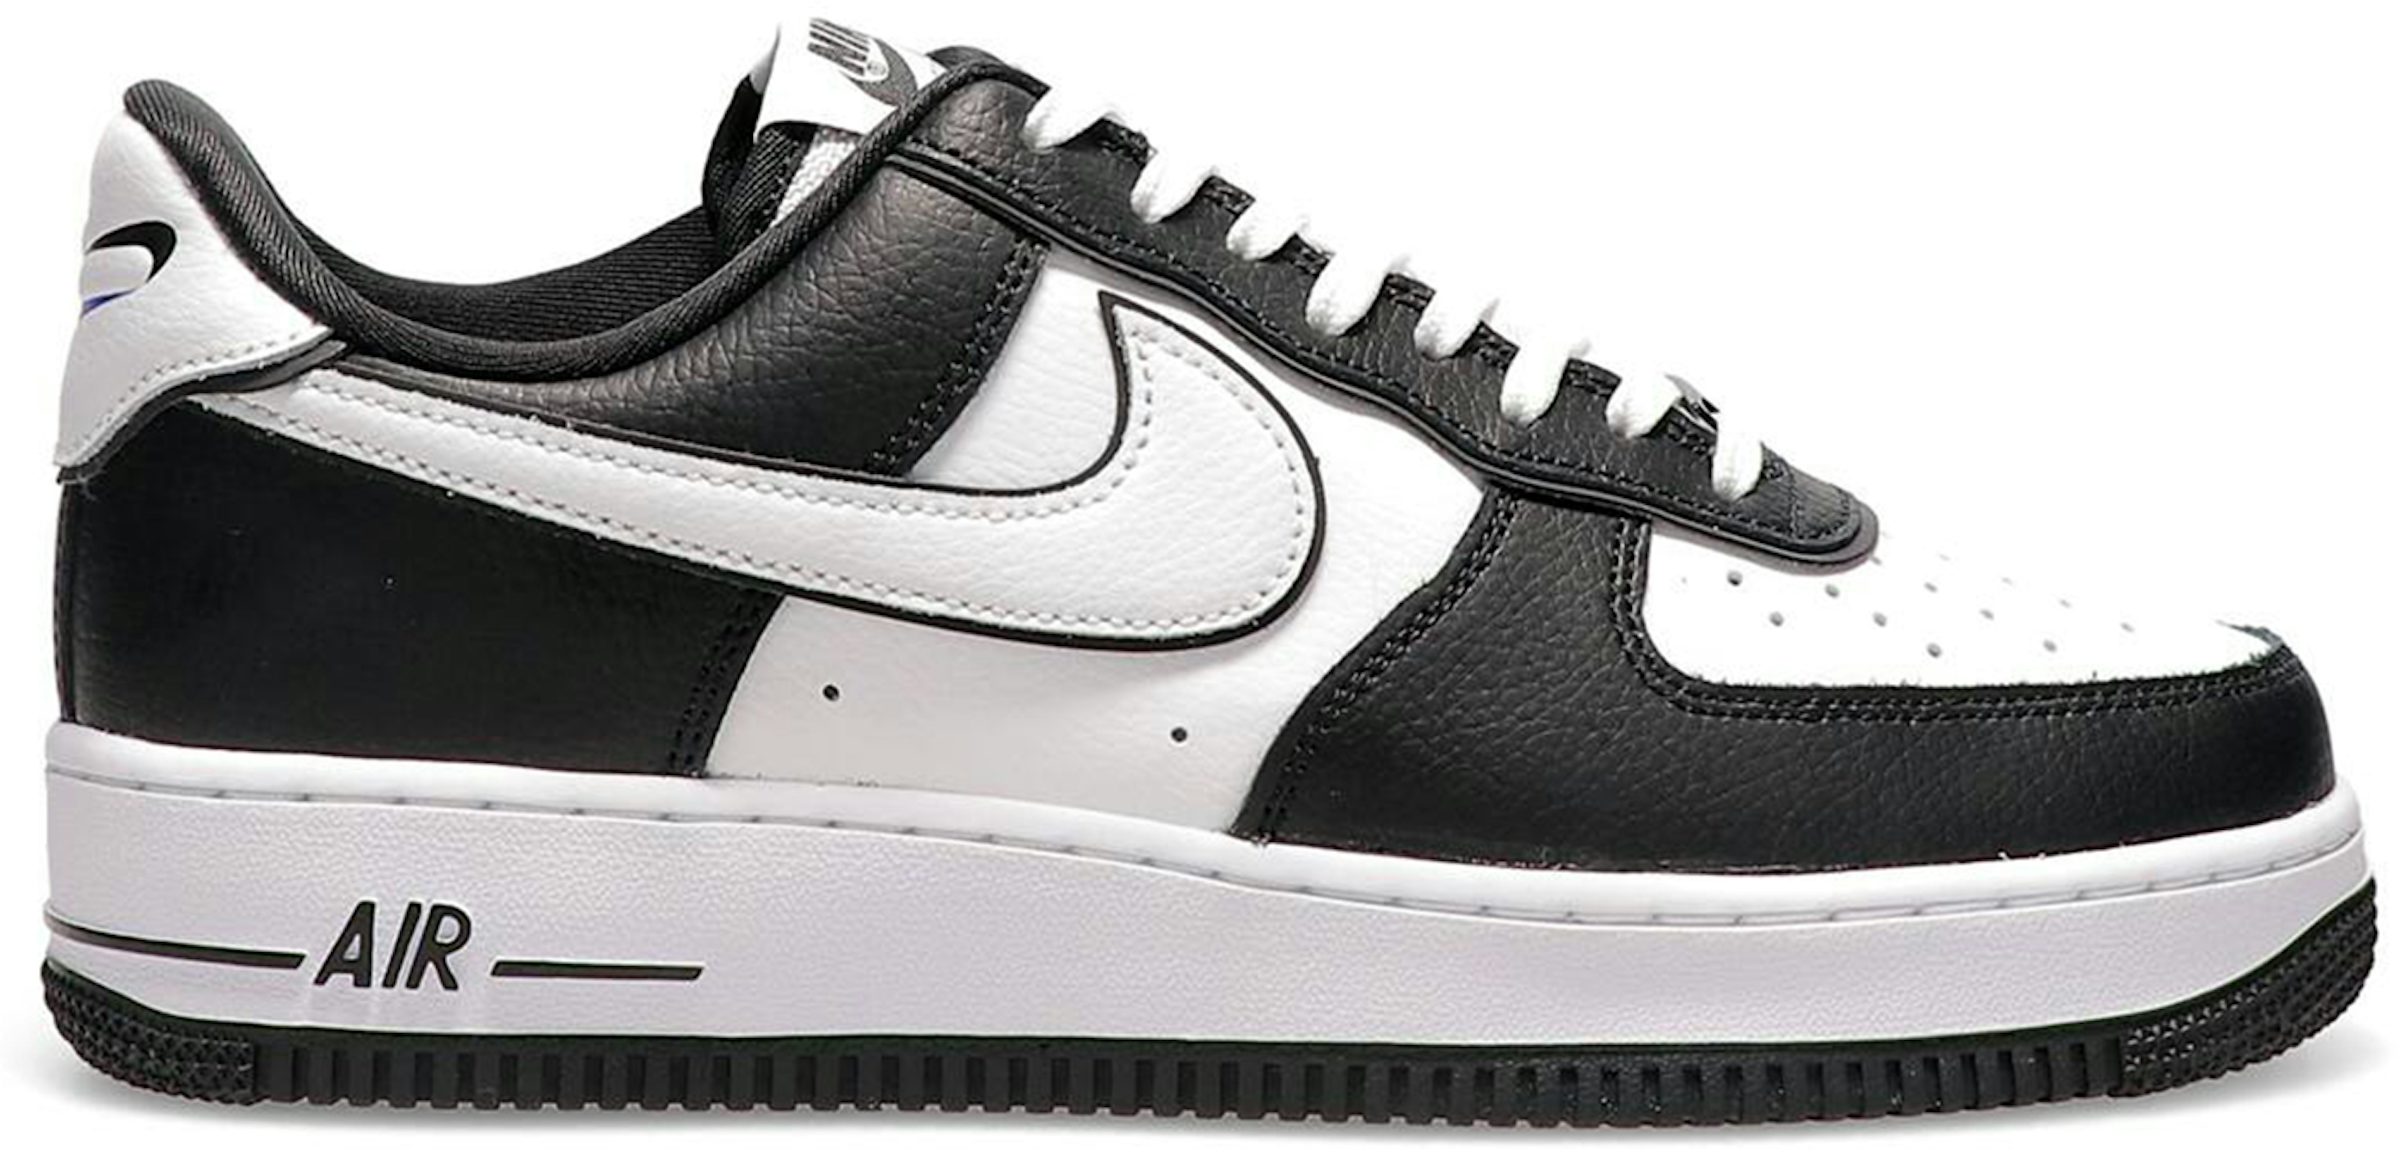 Nike Air Force 1 '07 LV8 Black/Summit White Men's Shoes, Size: 11